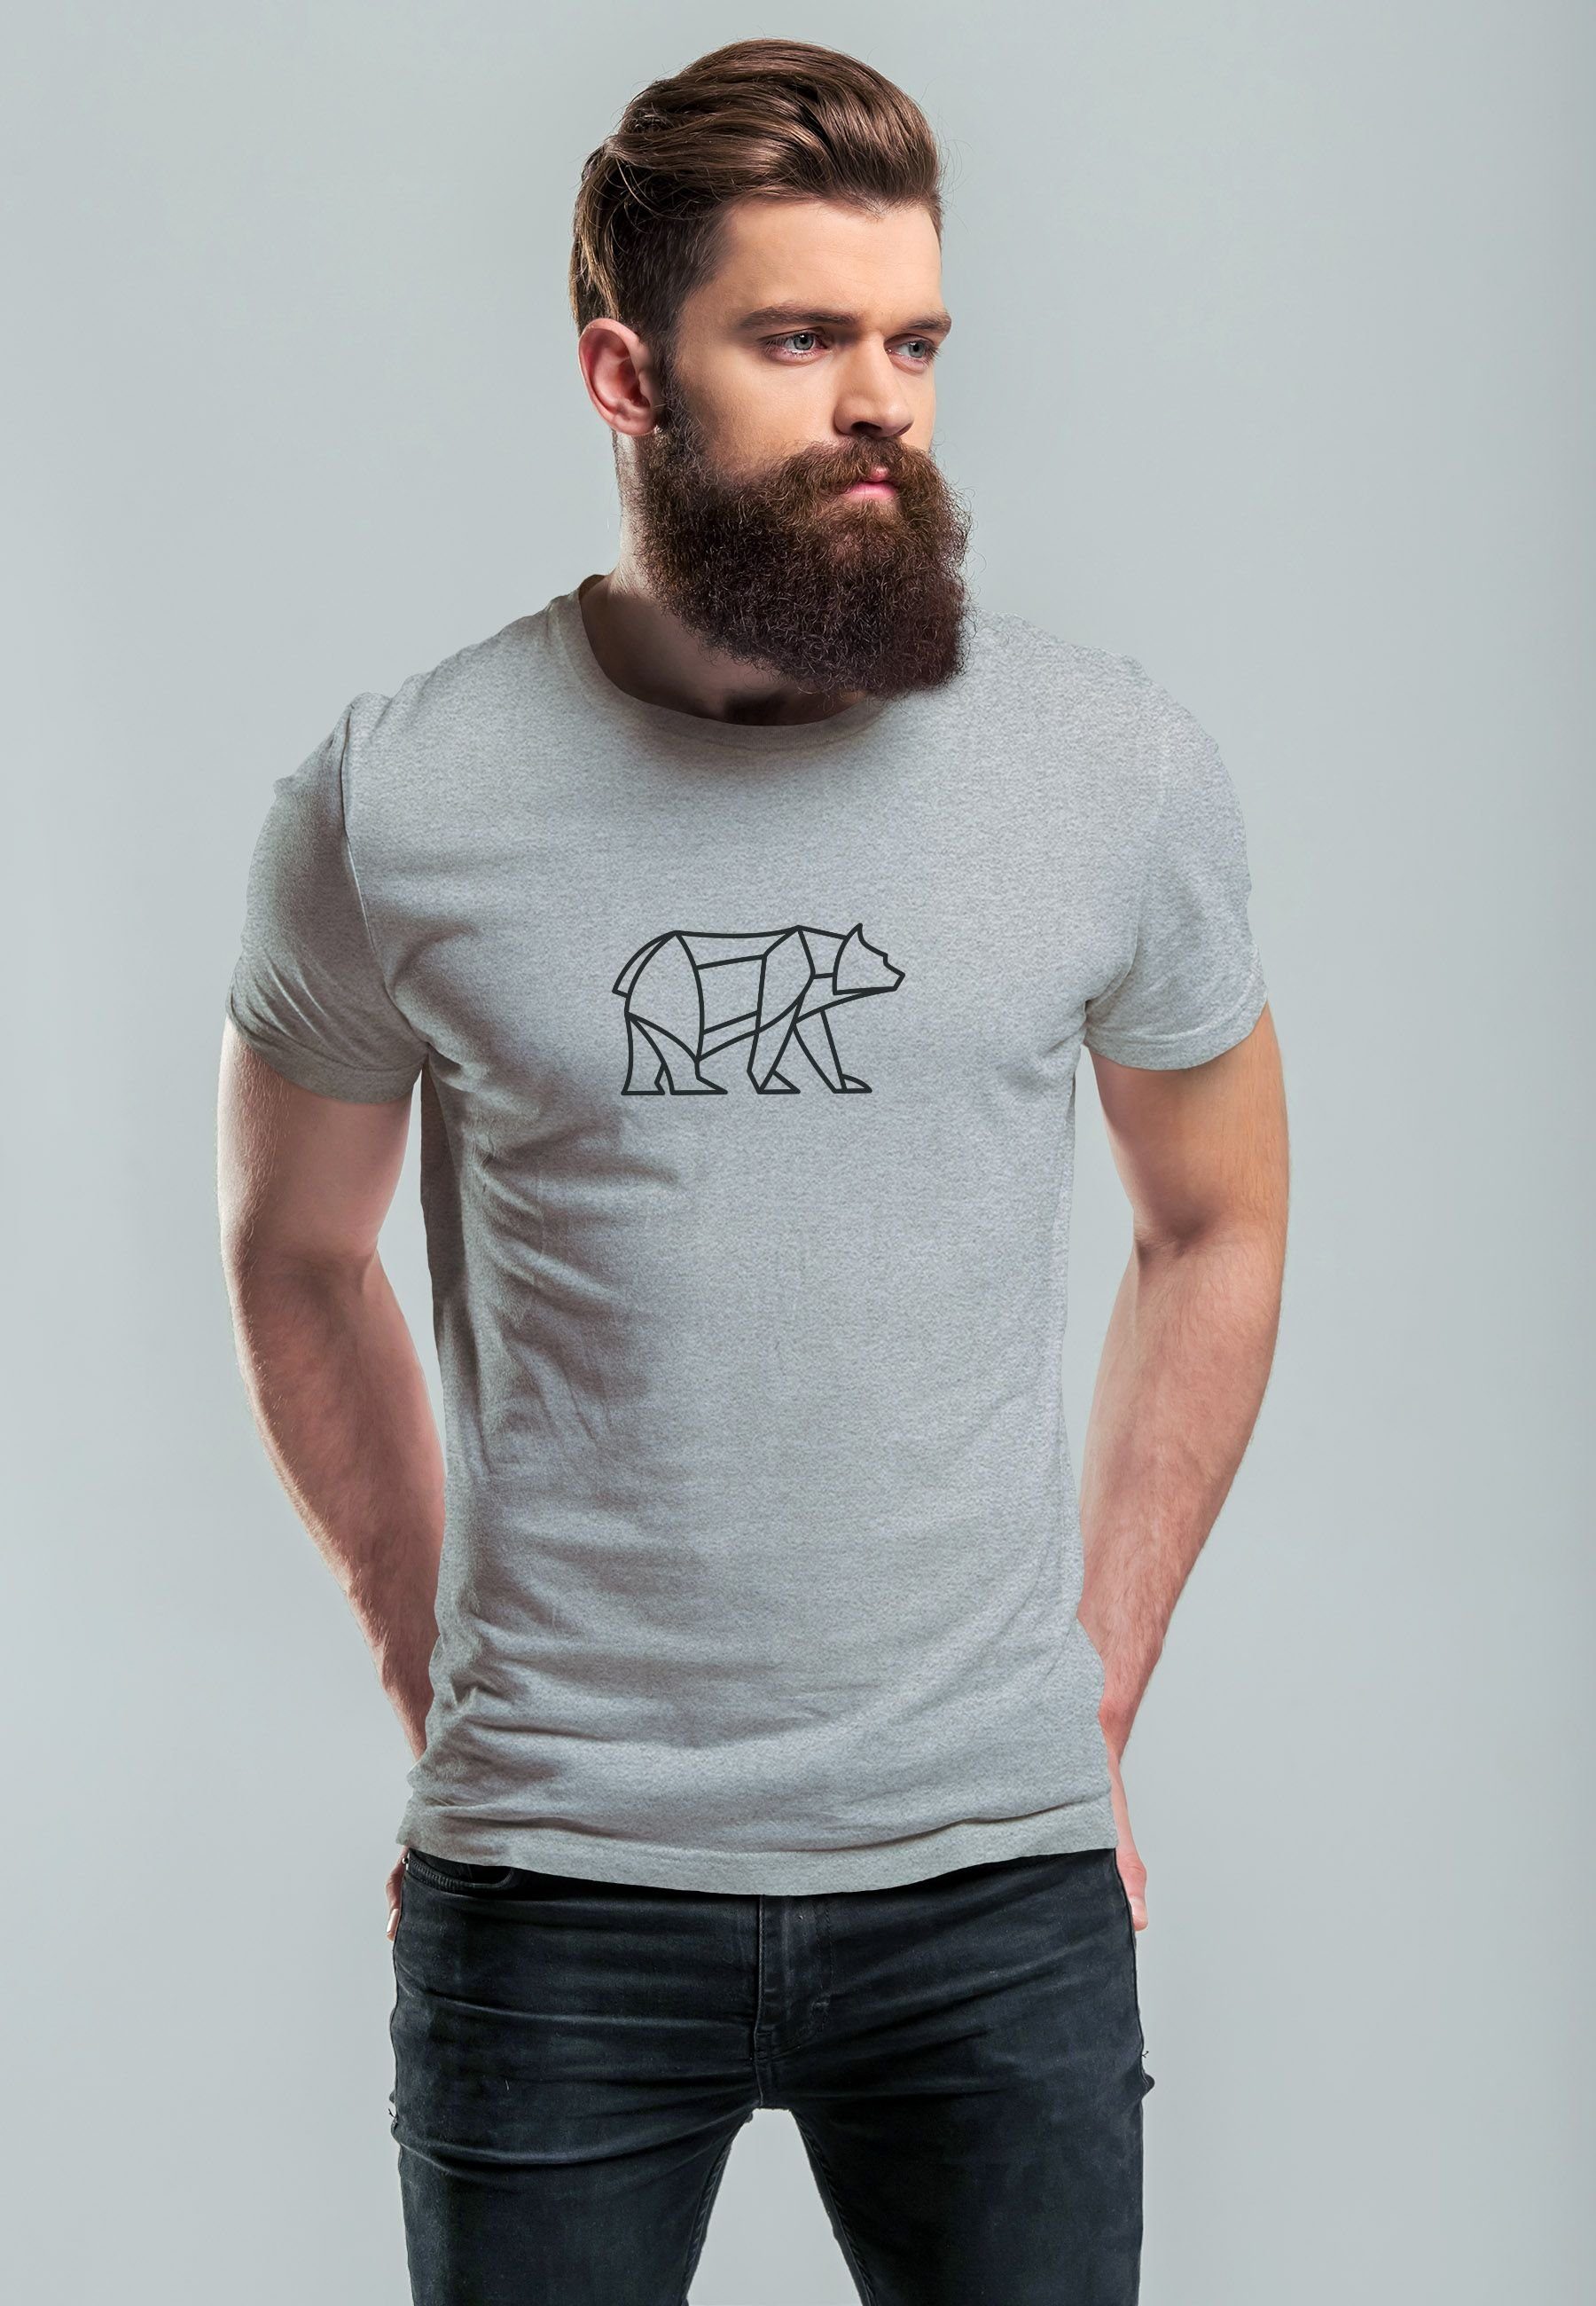 Herren grau mit T-Shirt Print Bär Print Neverless Bear 2 Print-Shirt Polygon Outdoor Design Polygon Fashion Tiermotiv